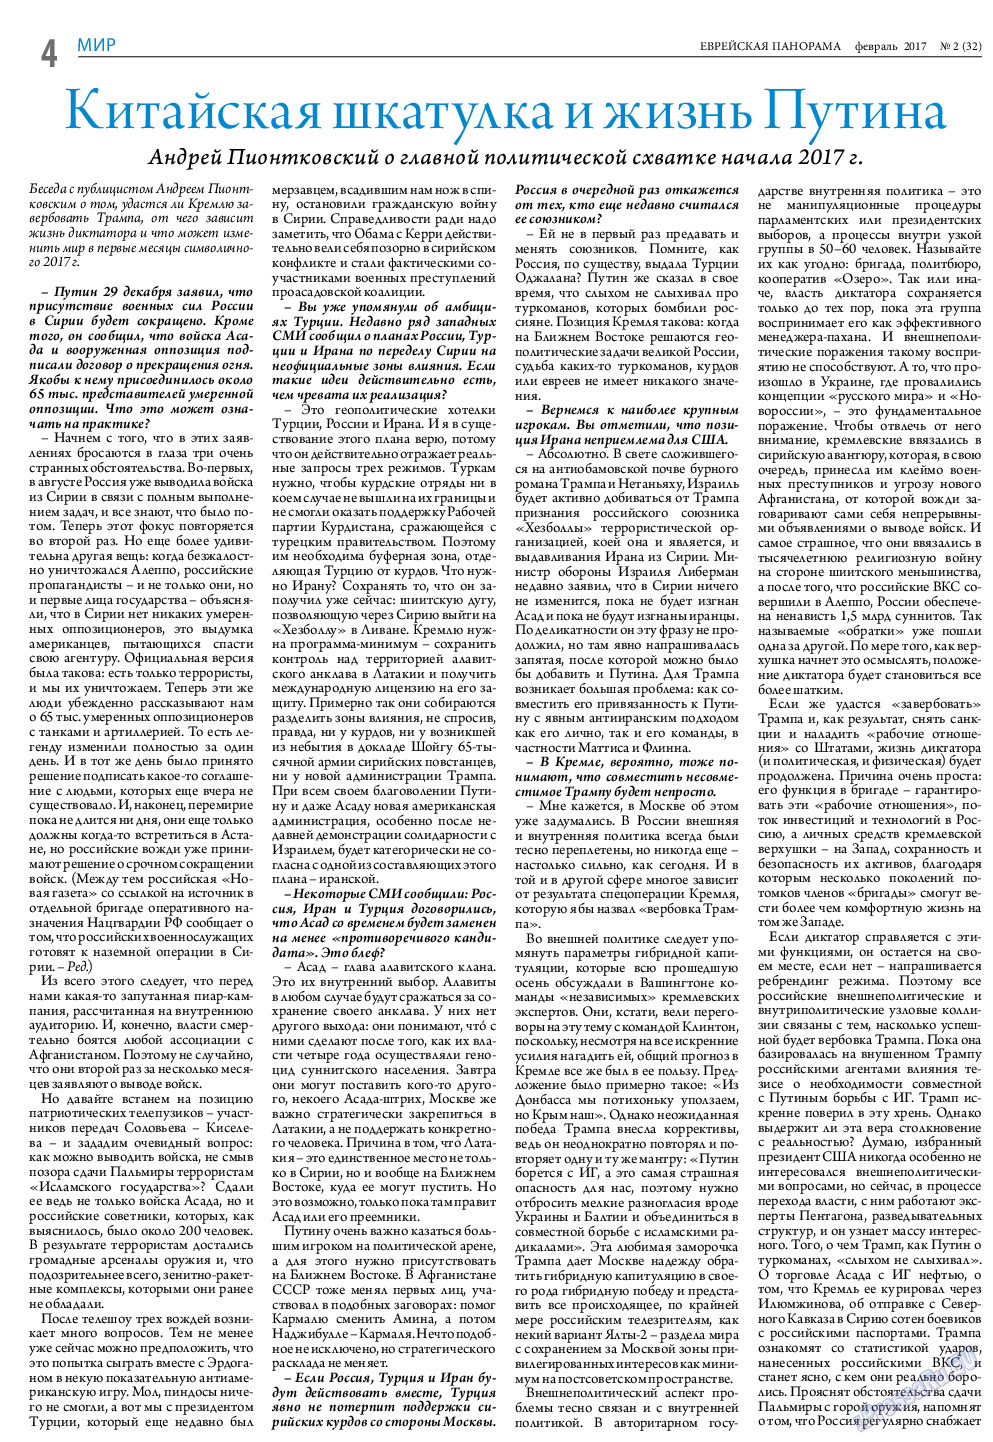 Еврейская панорама, газета. 2017 №2 стр.4